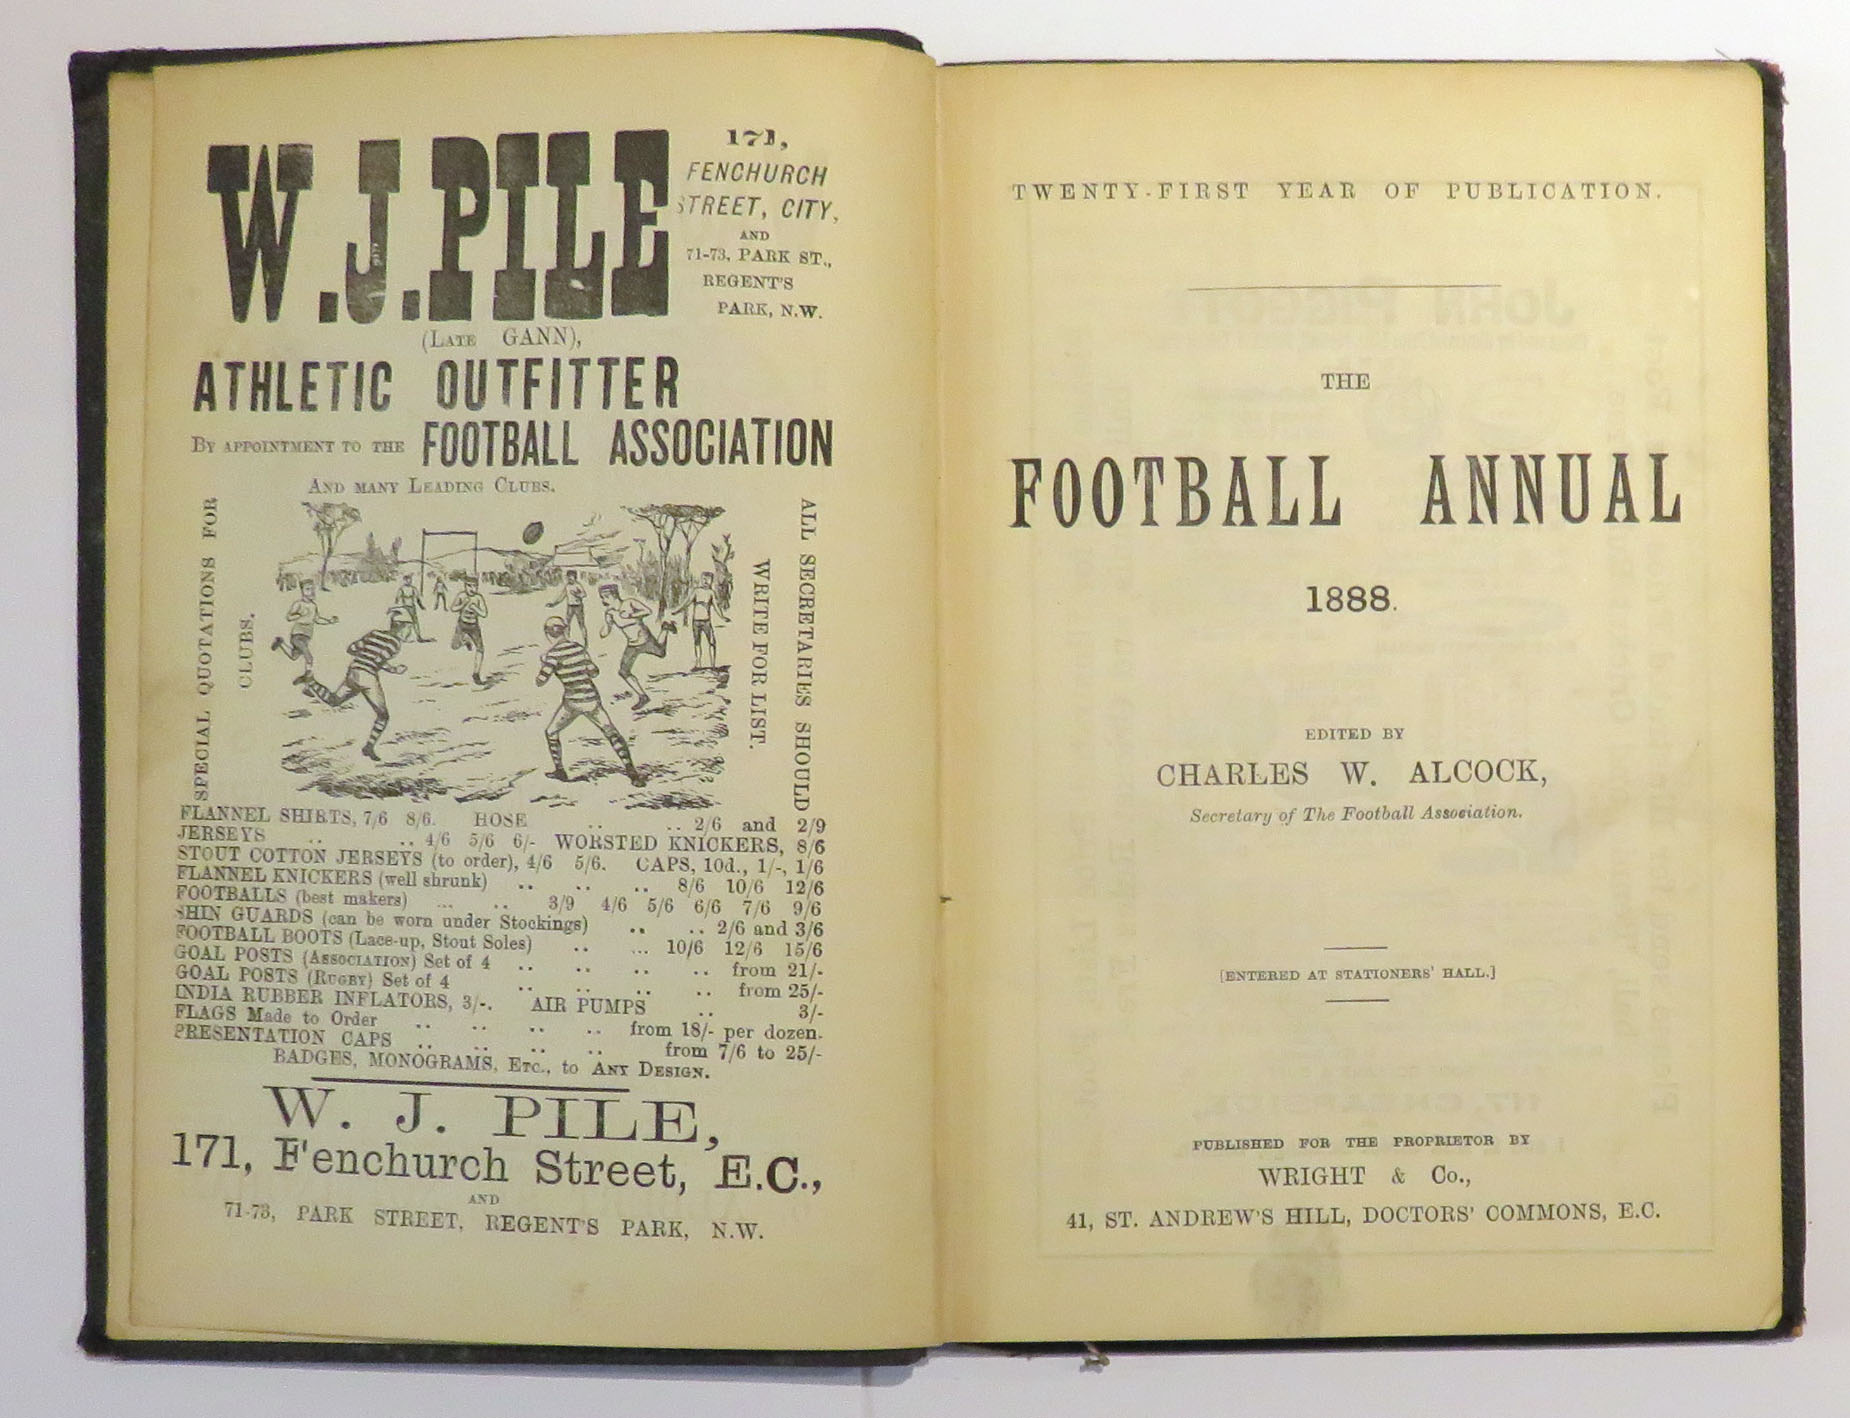 The Football Annual 1888